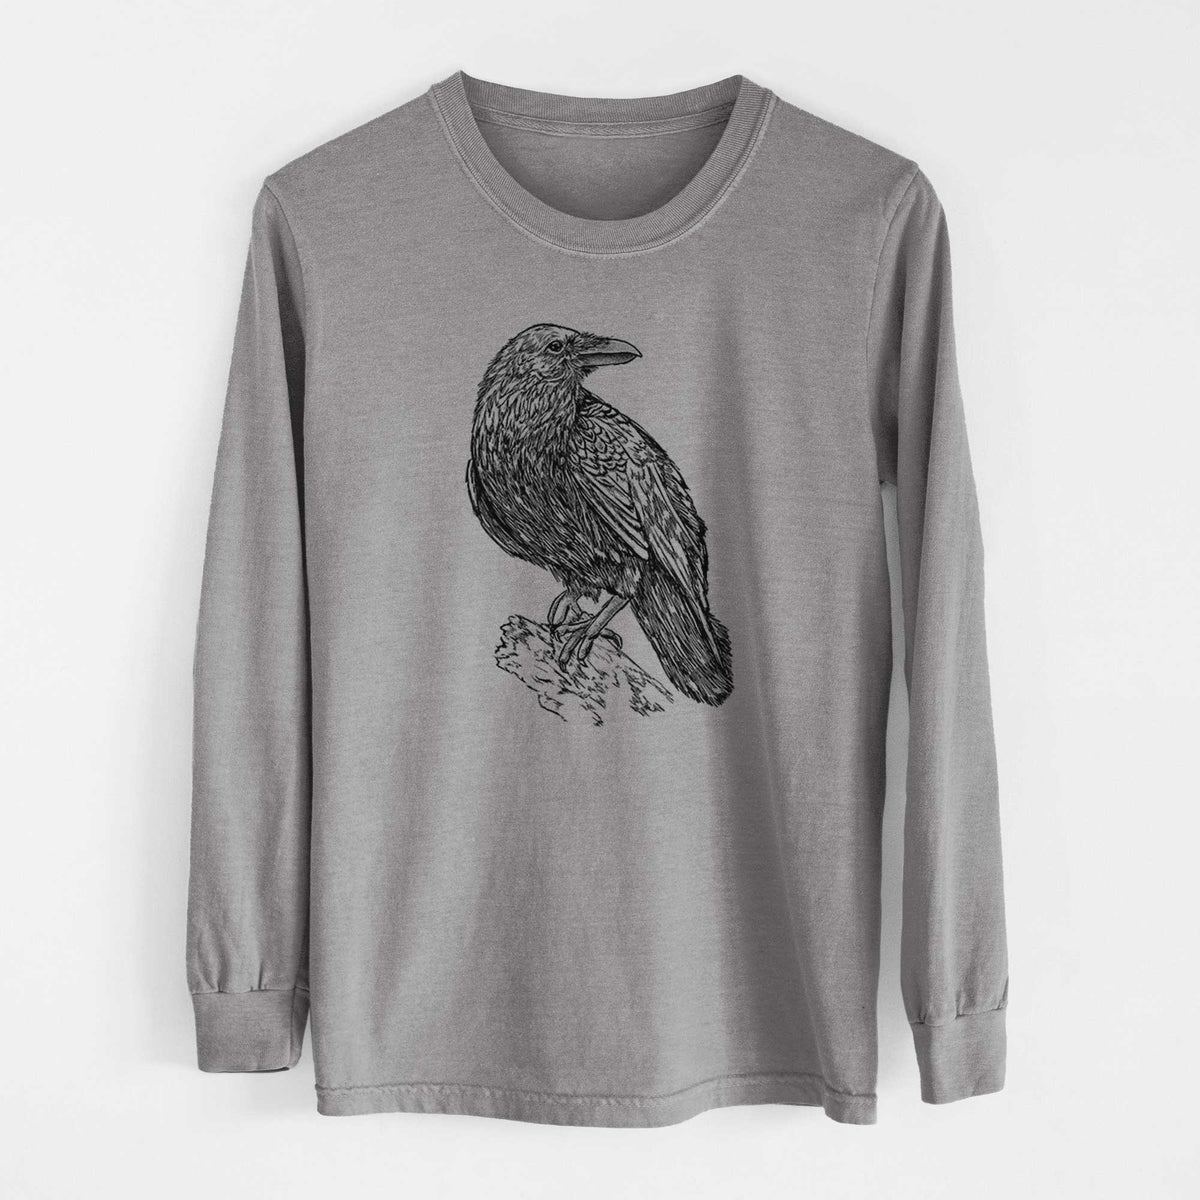 Corvus corax - Common Raven - Heavyweight 100% Cotton Long Sleeve